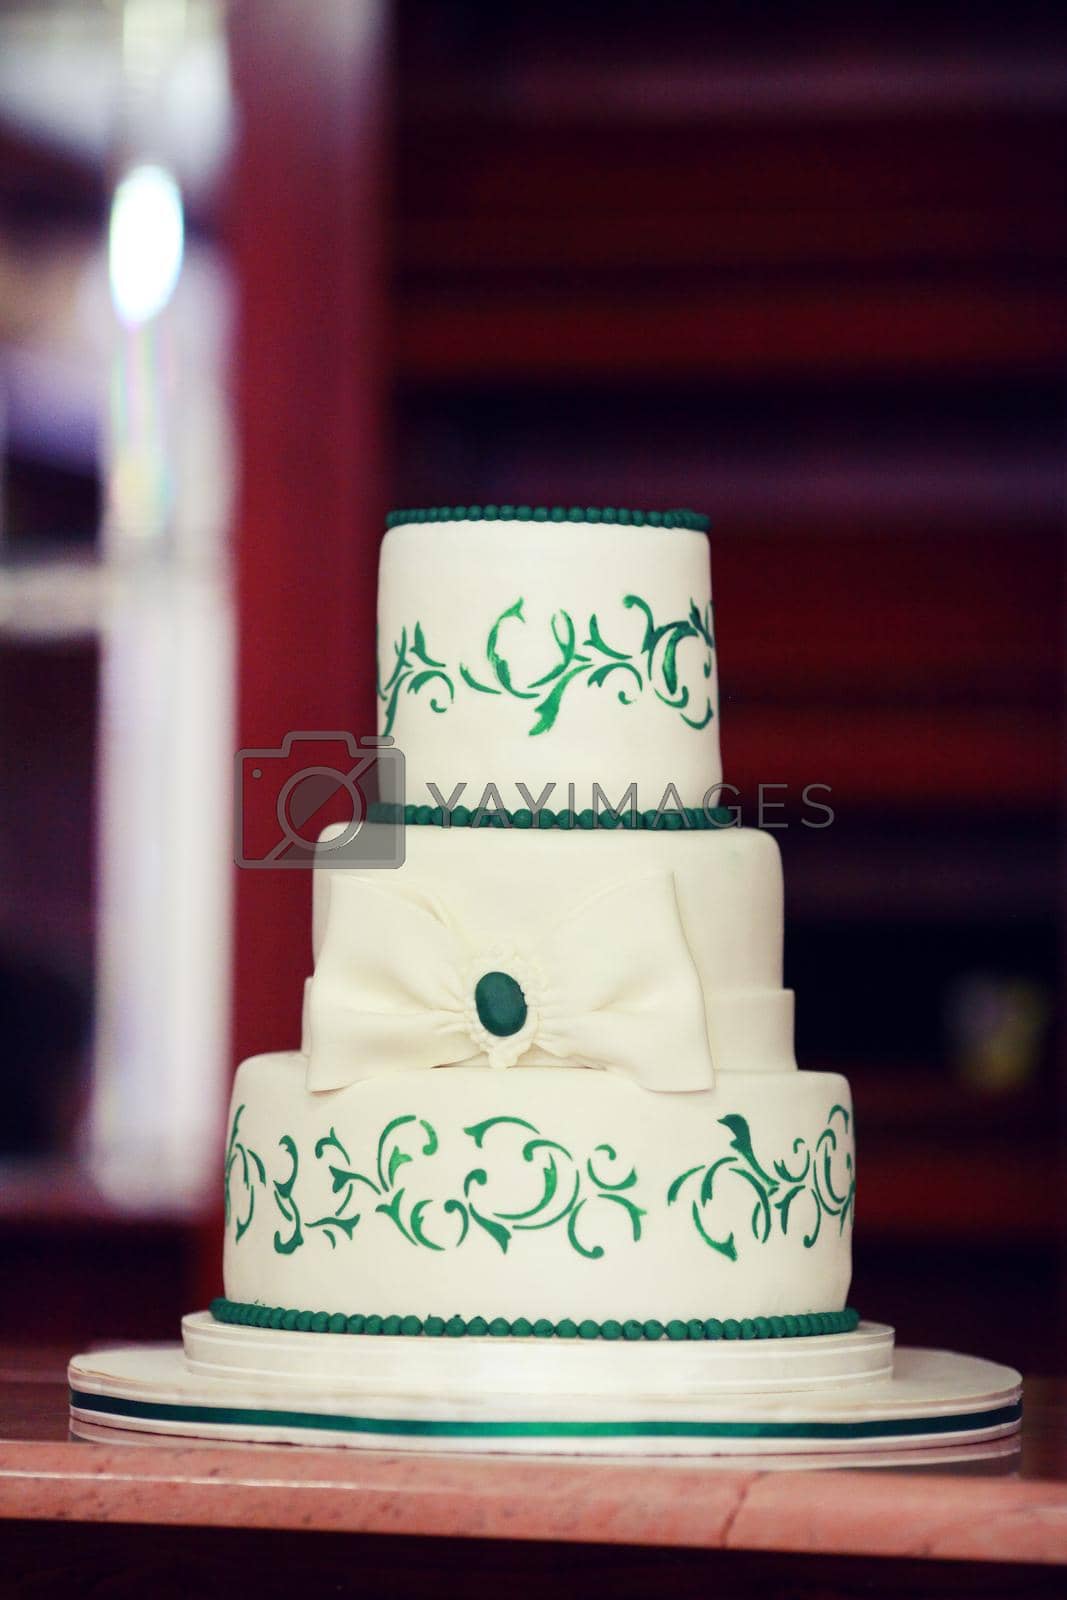 Royalty free image of wedding cake in rustic style by IvanGalashchuk